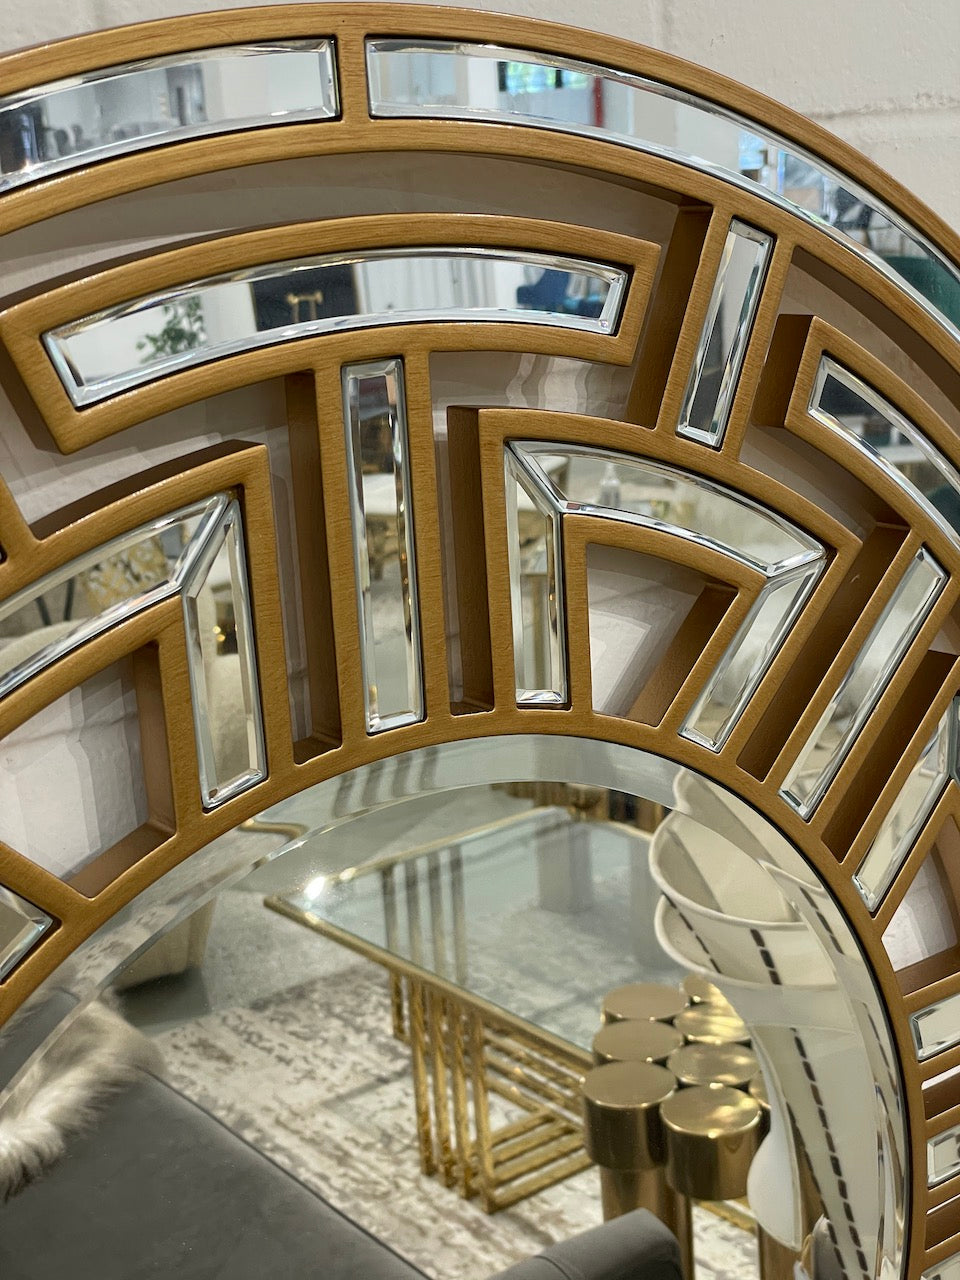 Naxos Round Mirror - Future Classics Furniture